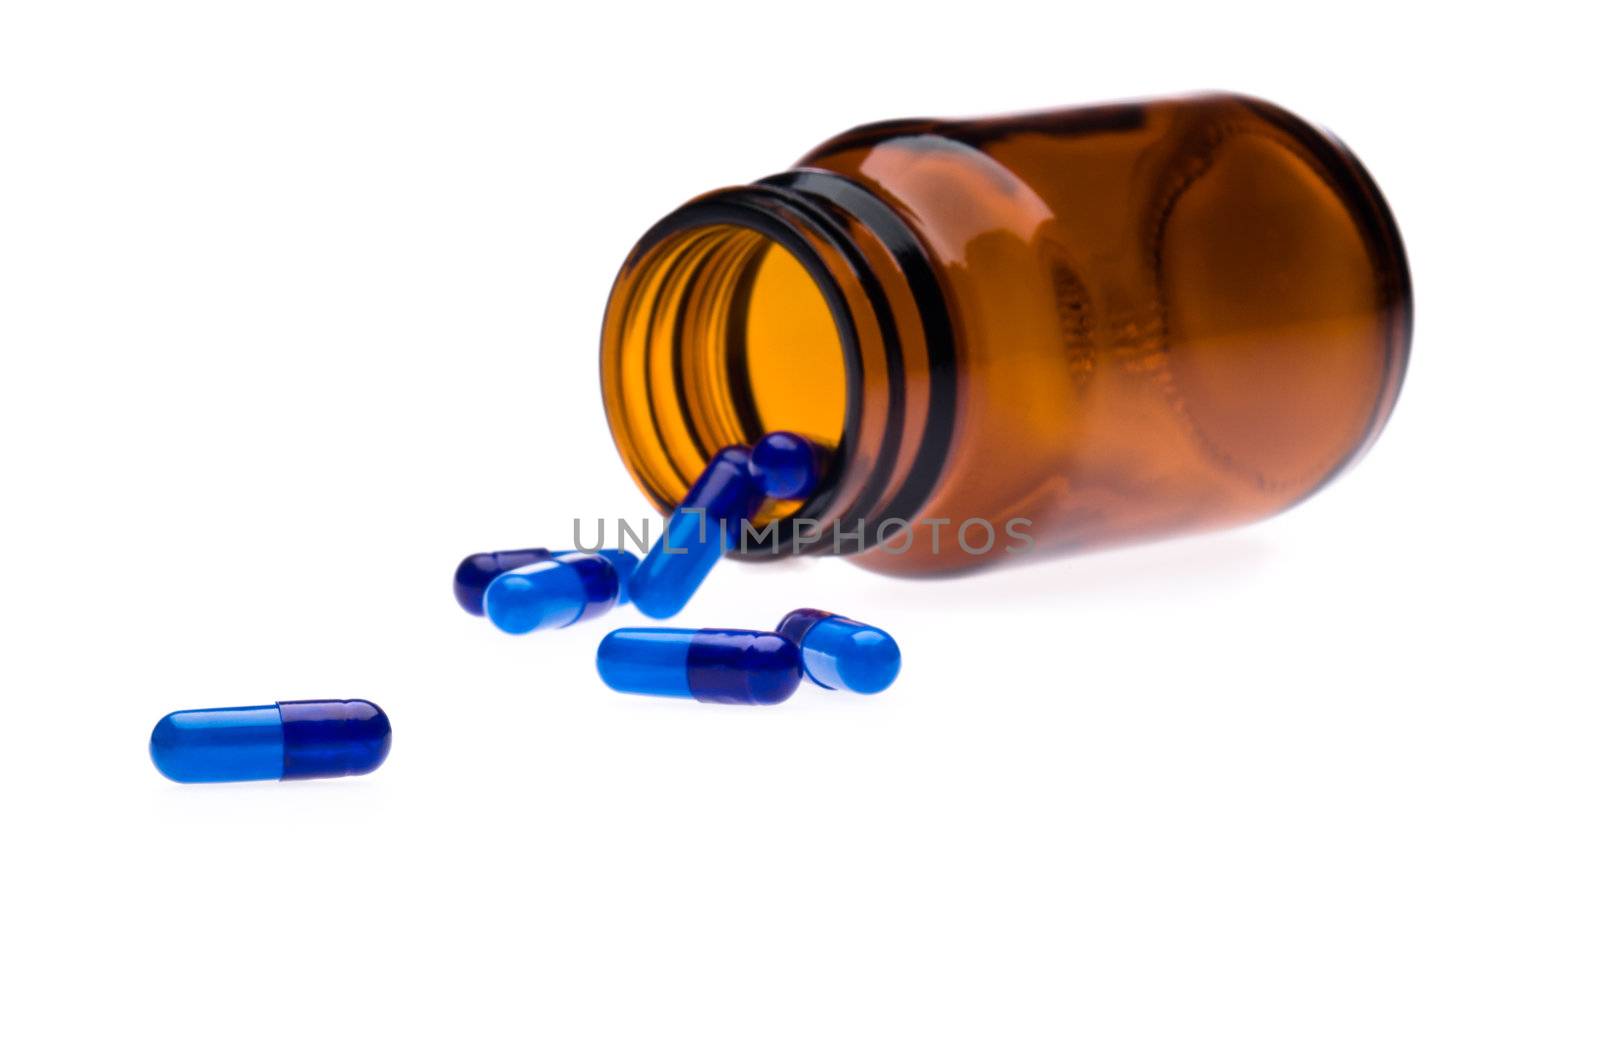 One bottle spilled pills by 3523Studio